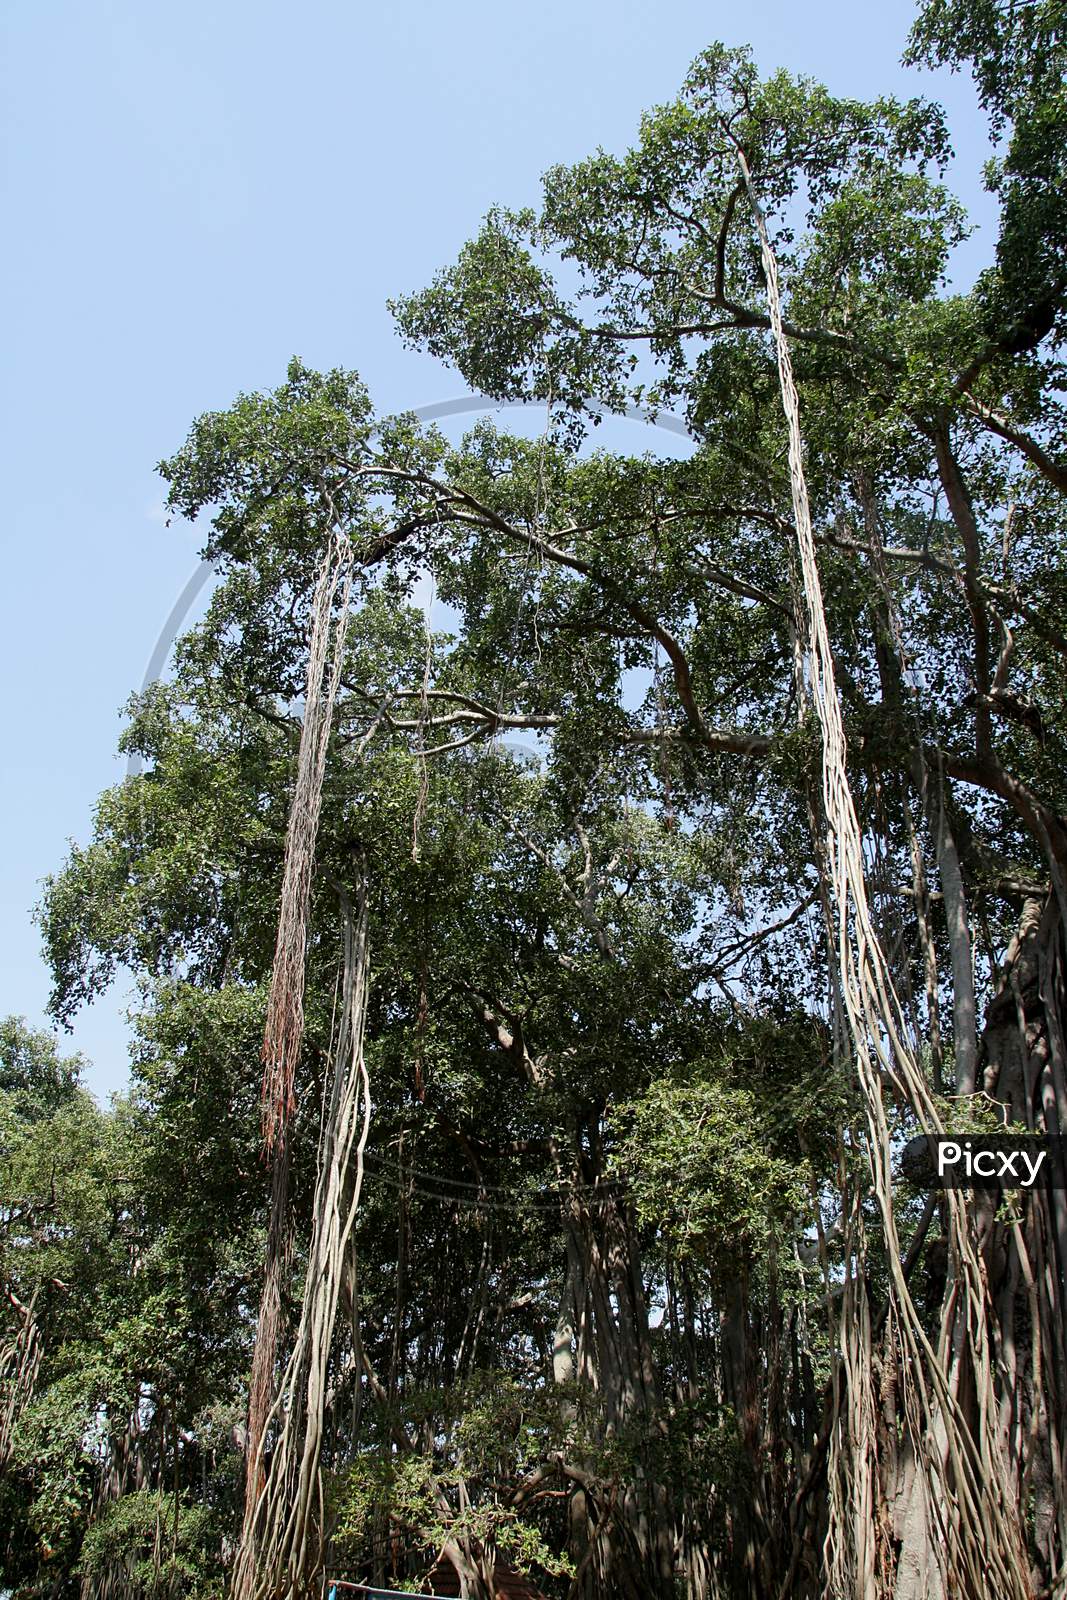 Hanging Roots Of Banyan Tree